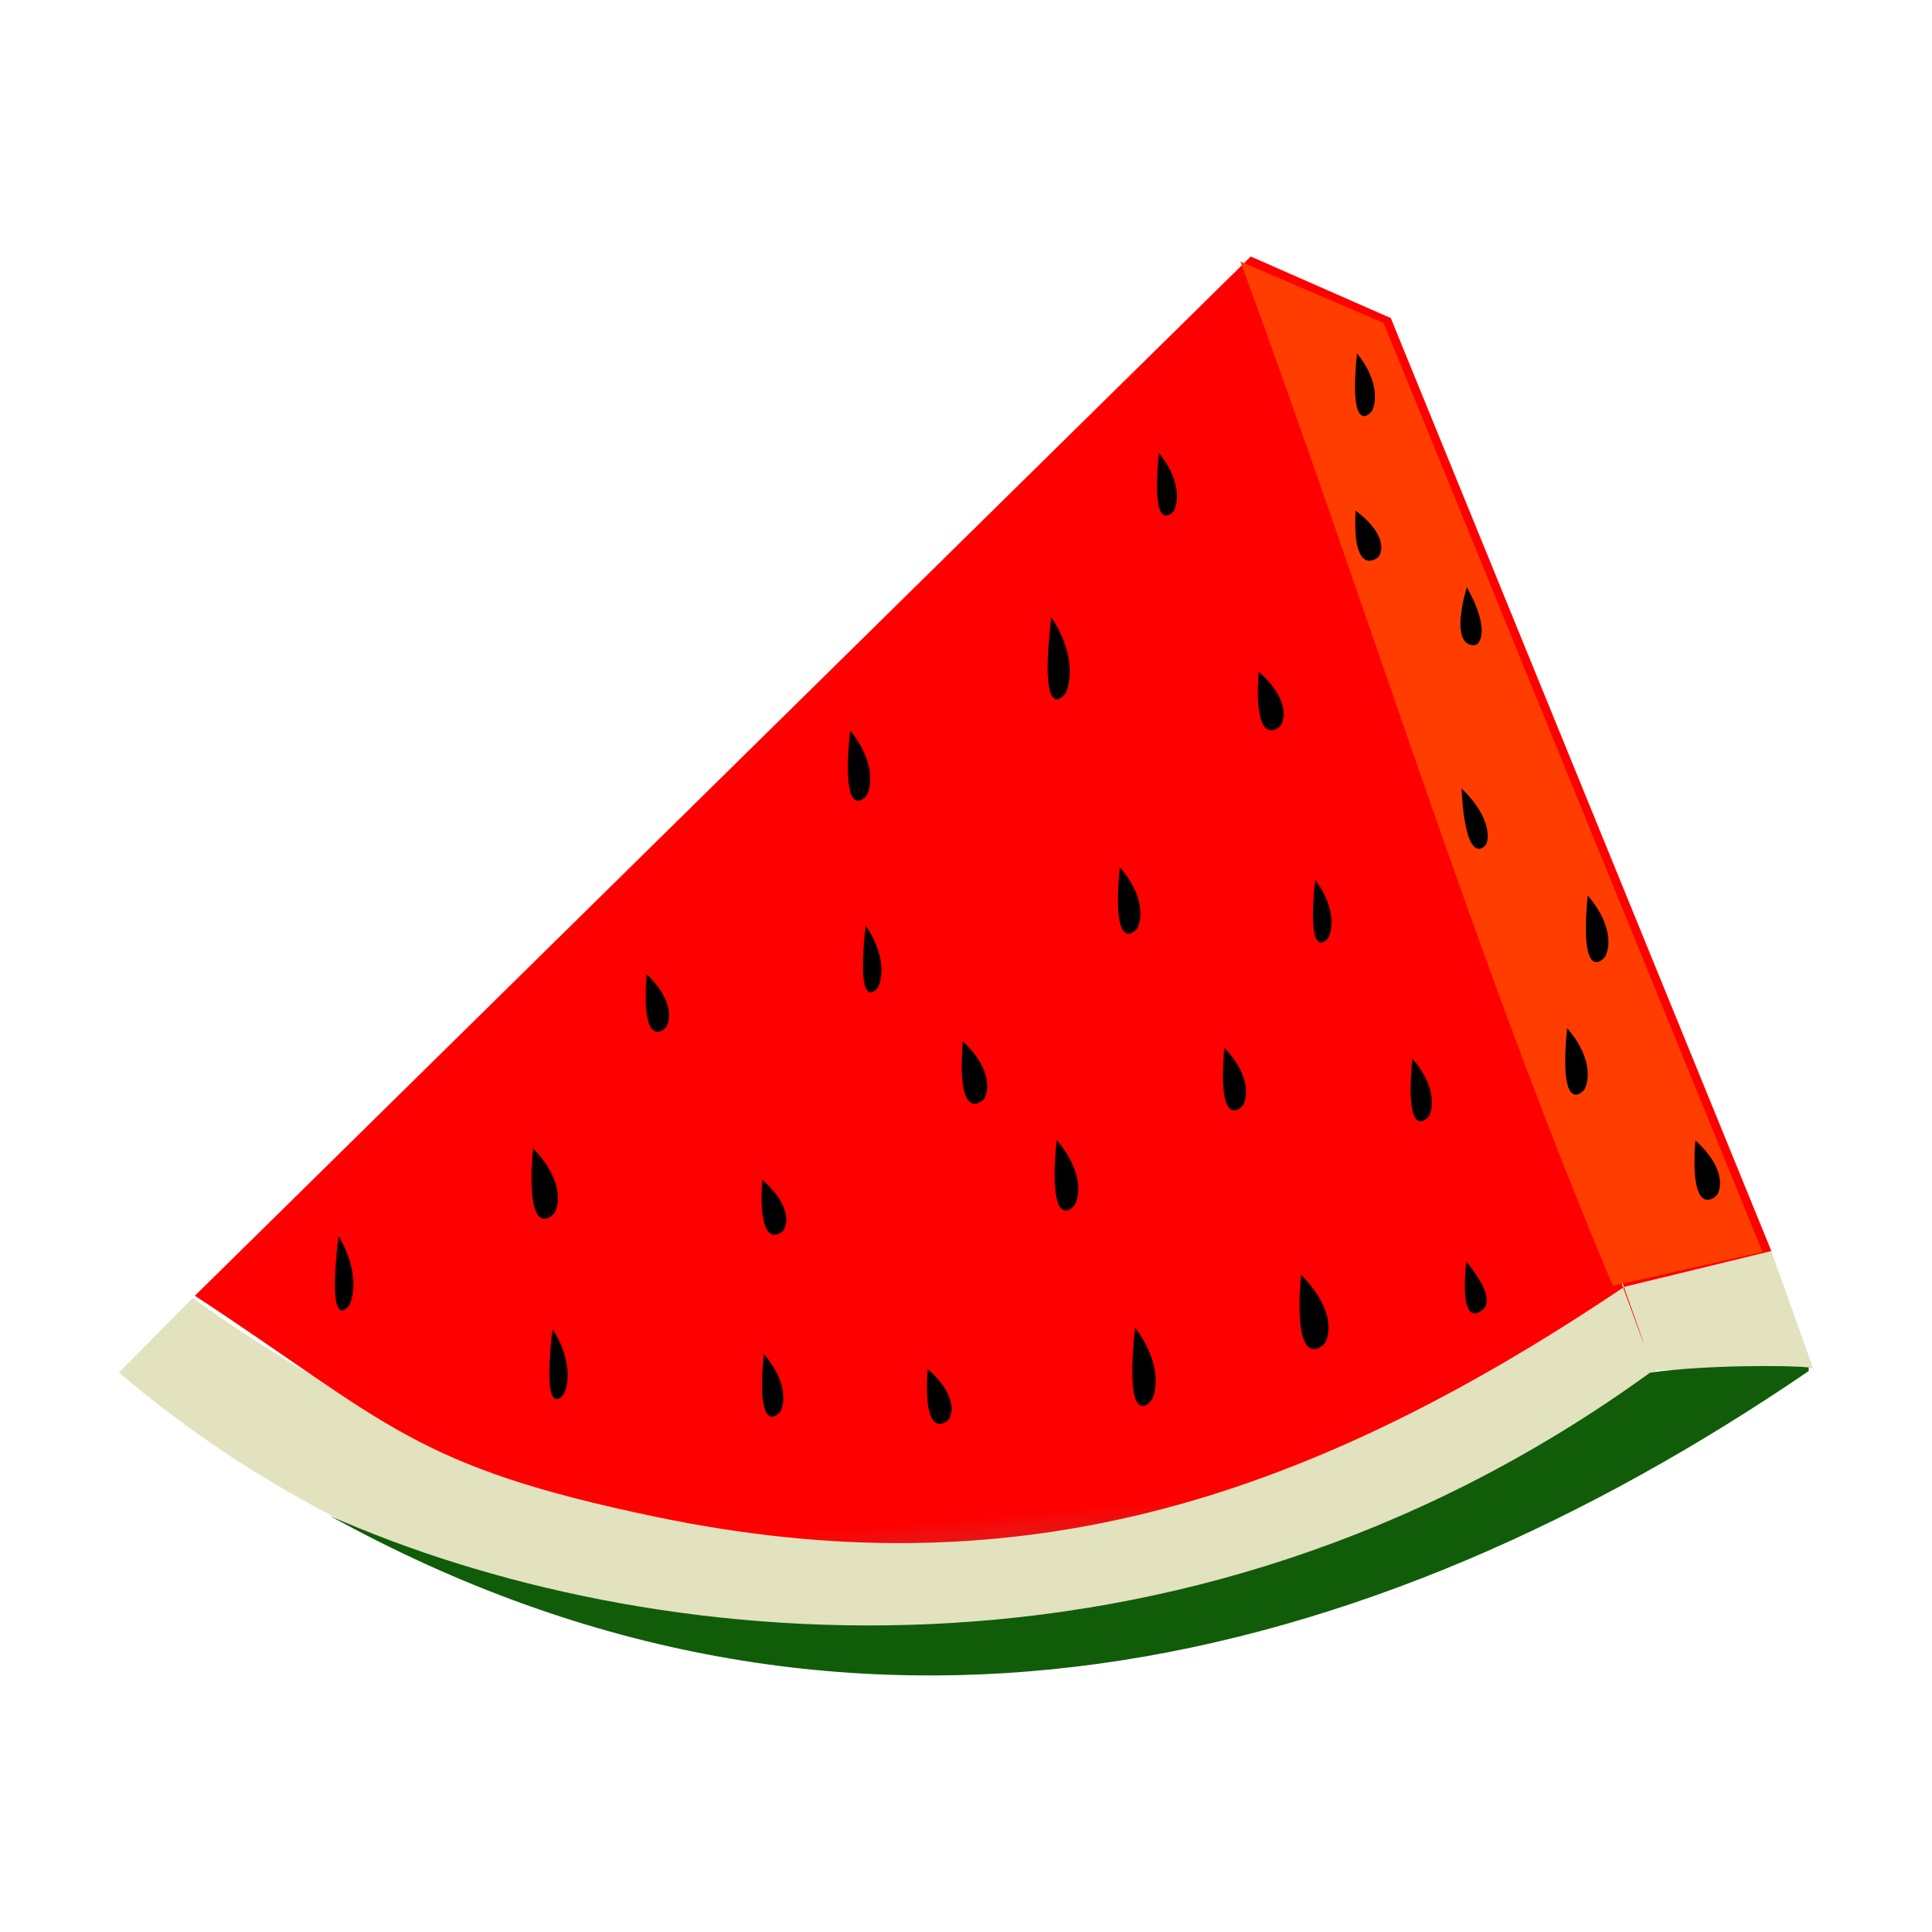 Watermelon vector clipart.